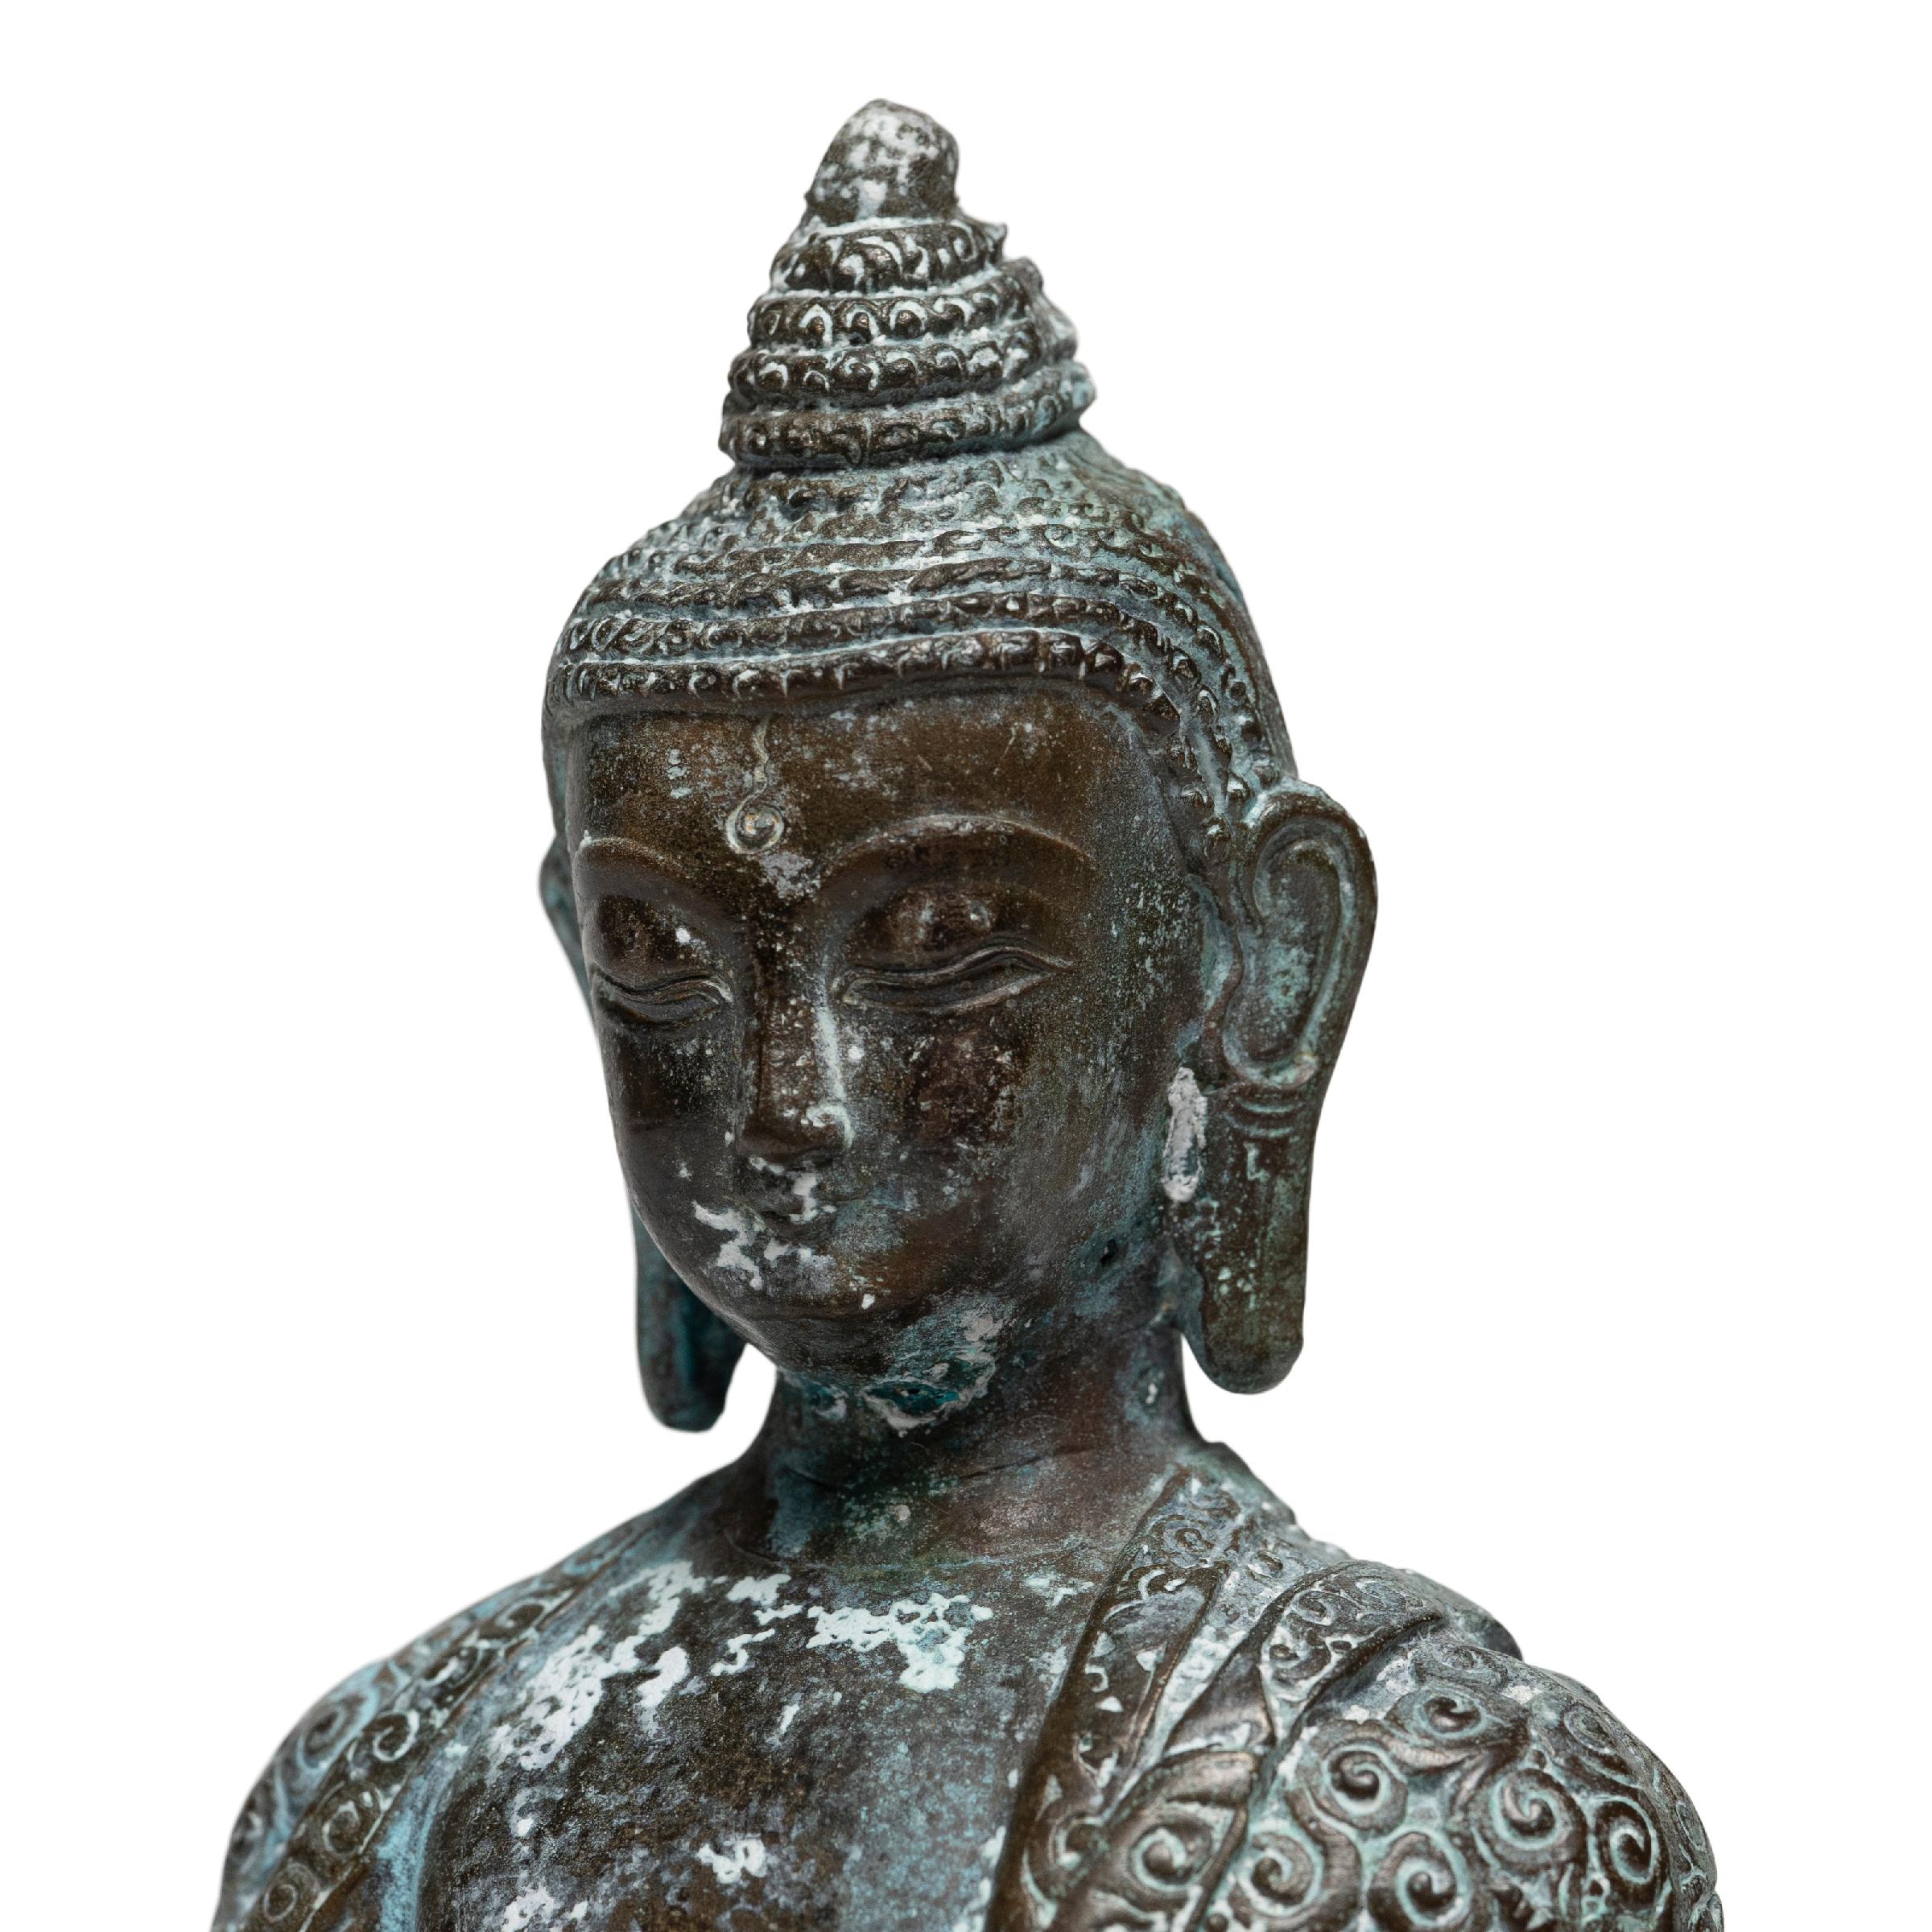 Cast Chinese Bronze Seated Buddha Figure, c. 1850 